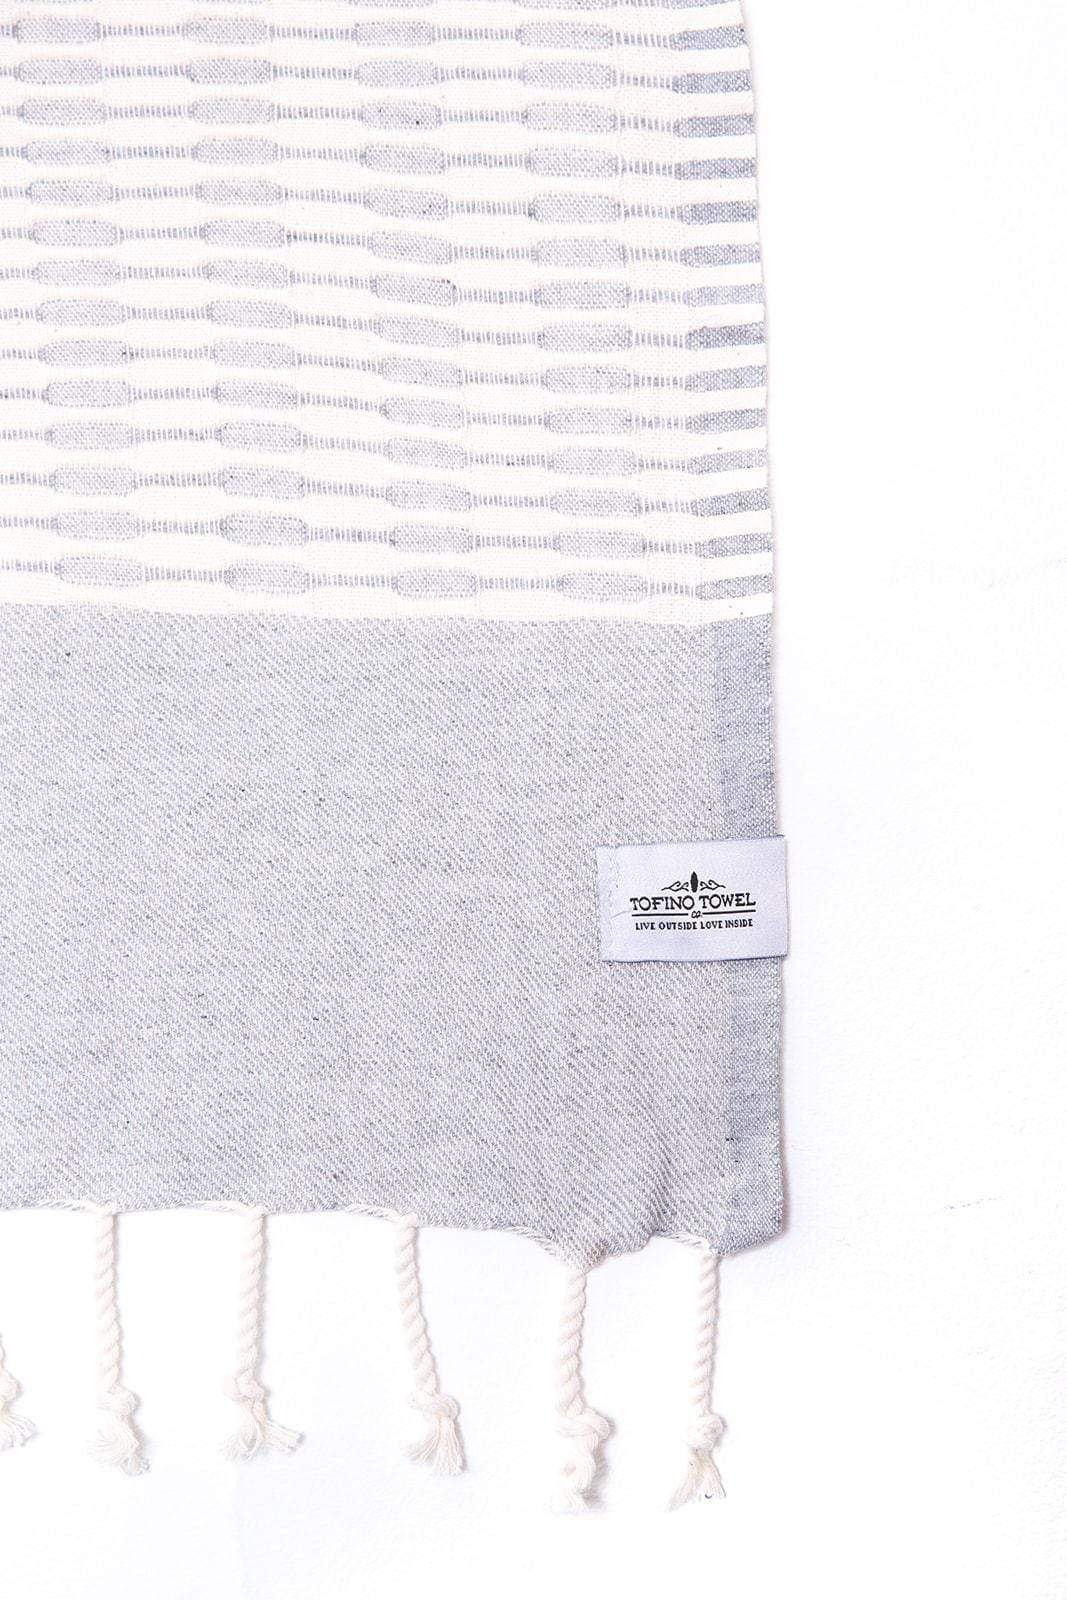 Tofino Towels Throw Grey Tofino Towels | THE RIPPLE SERIES